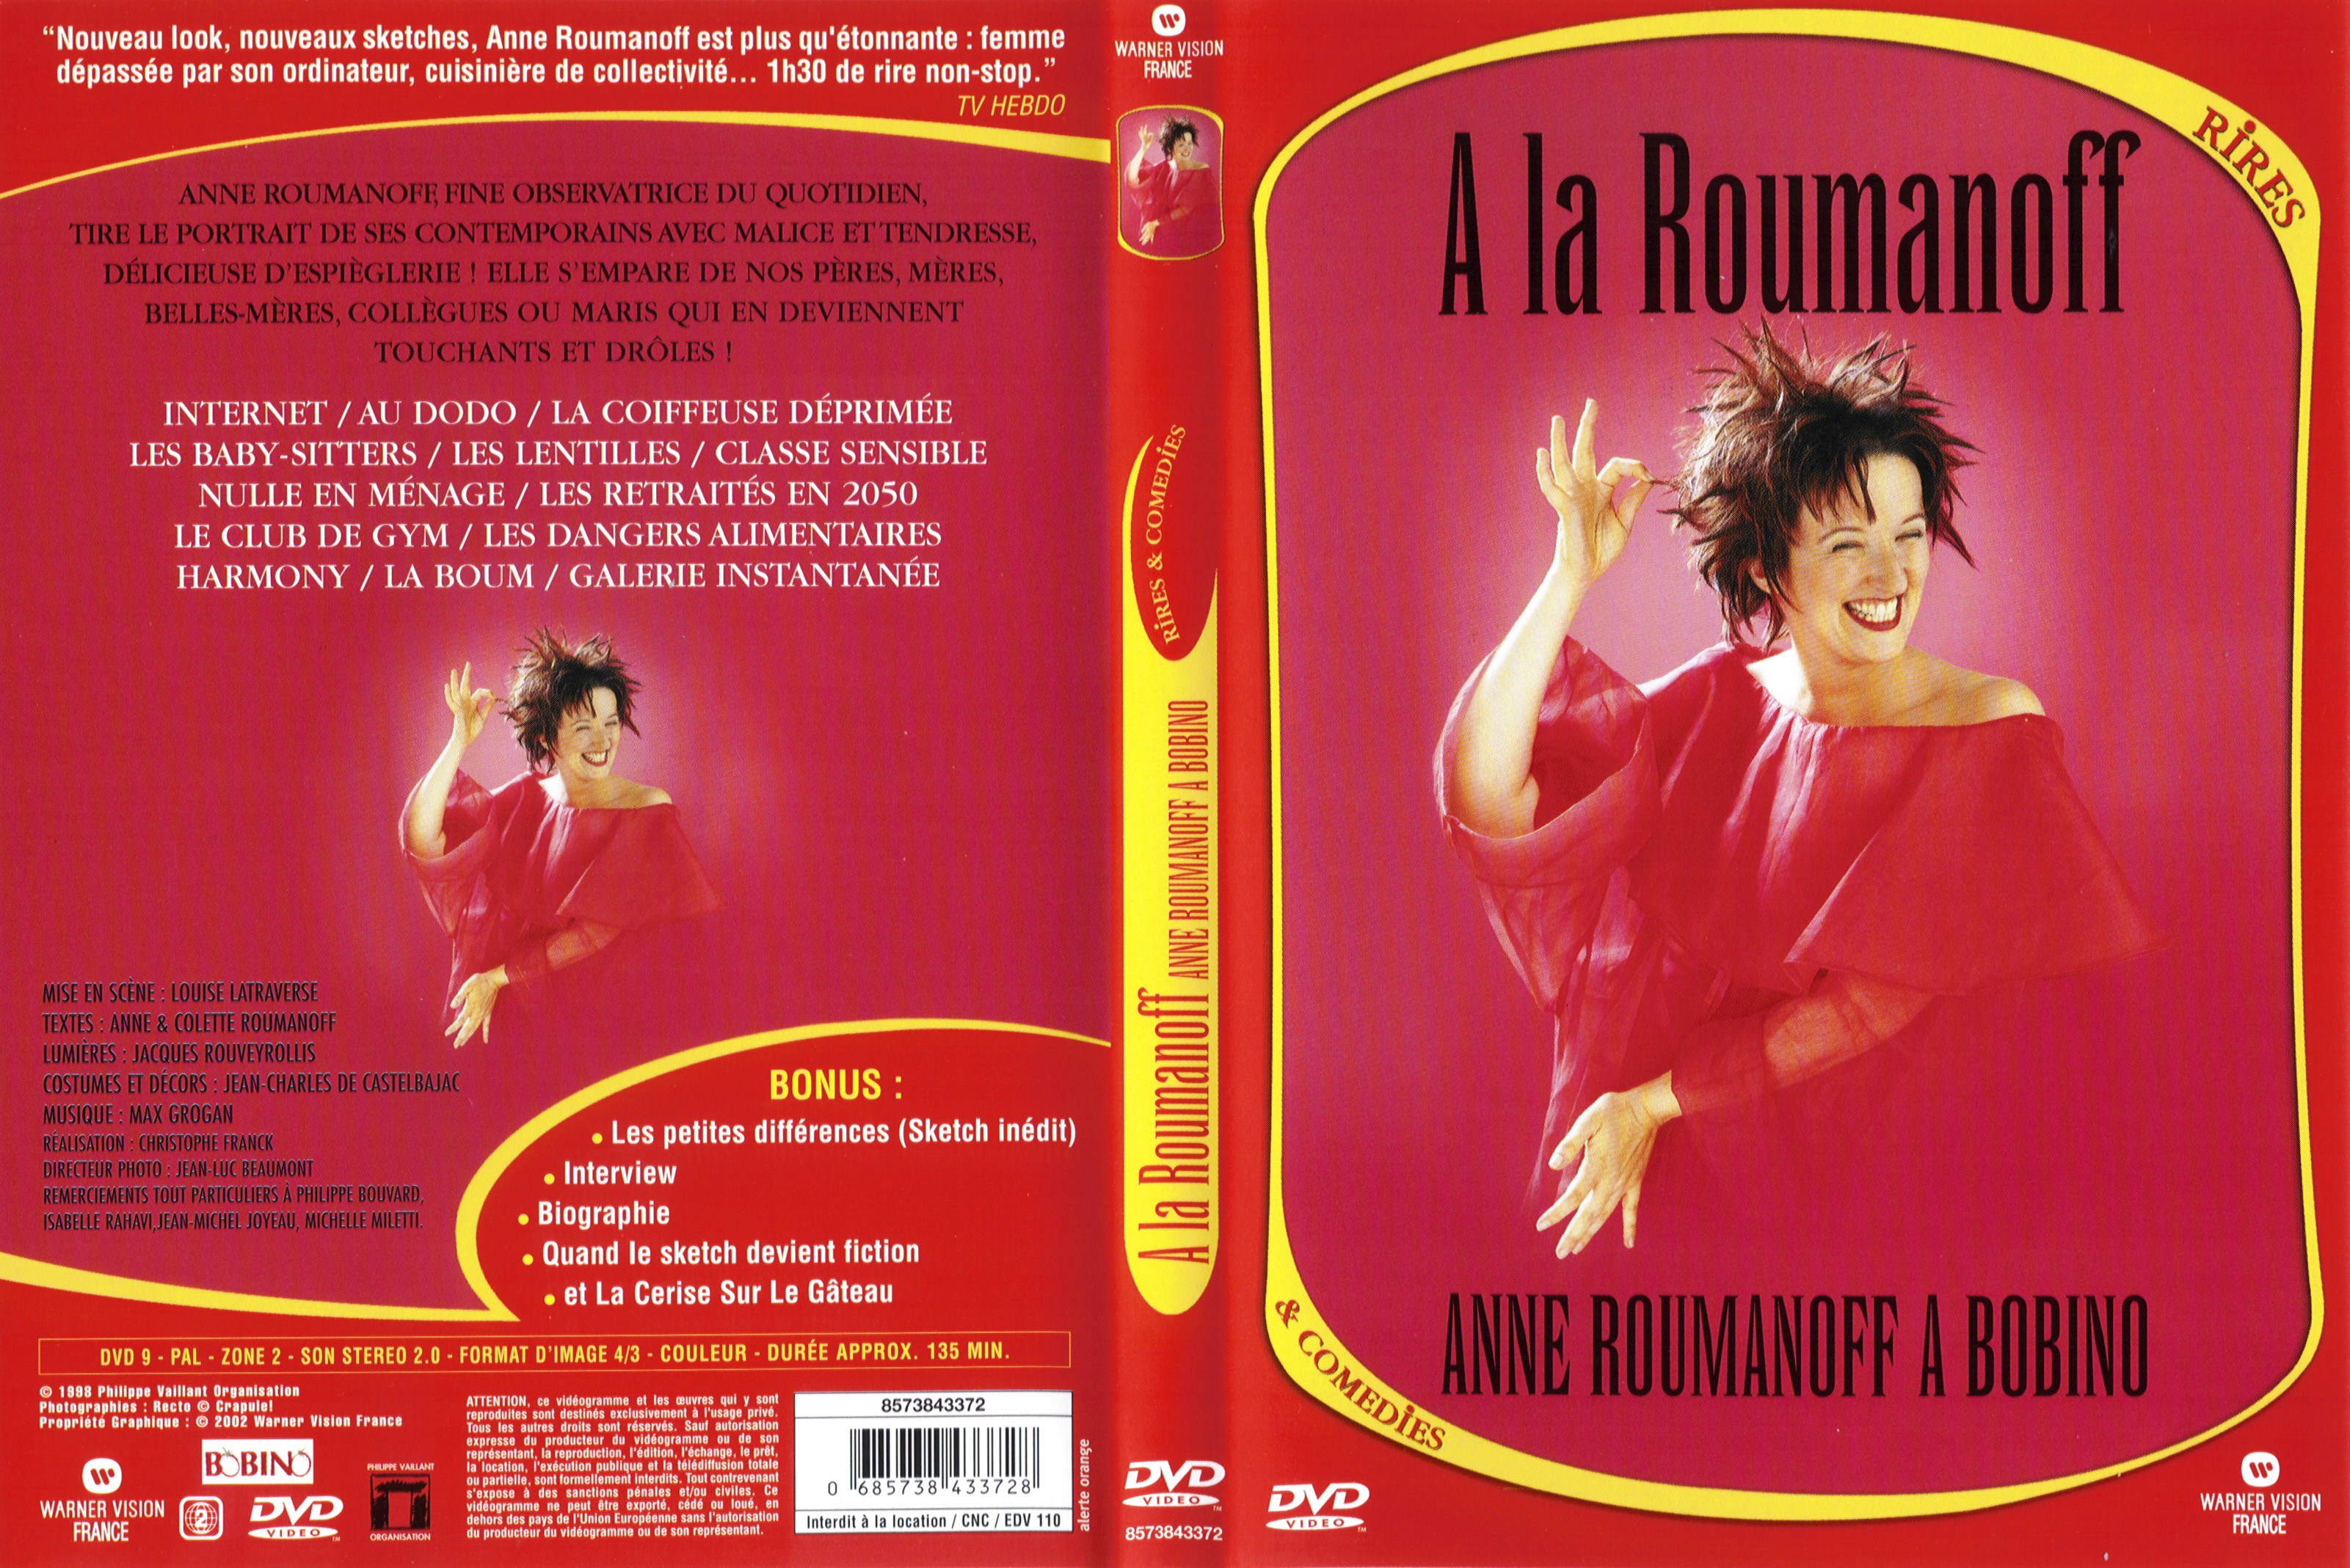 Jaquette DVD A la Roumanoff v2